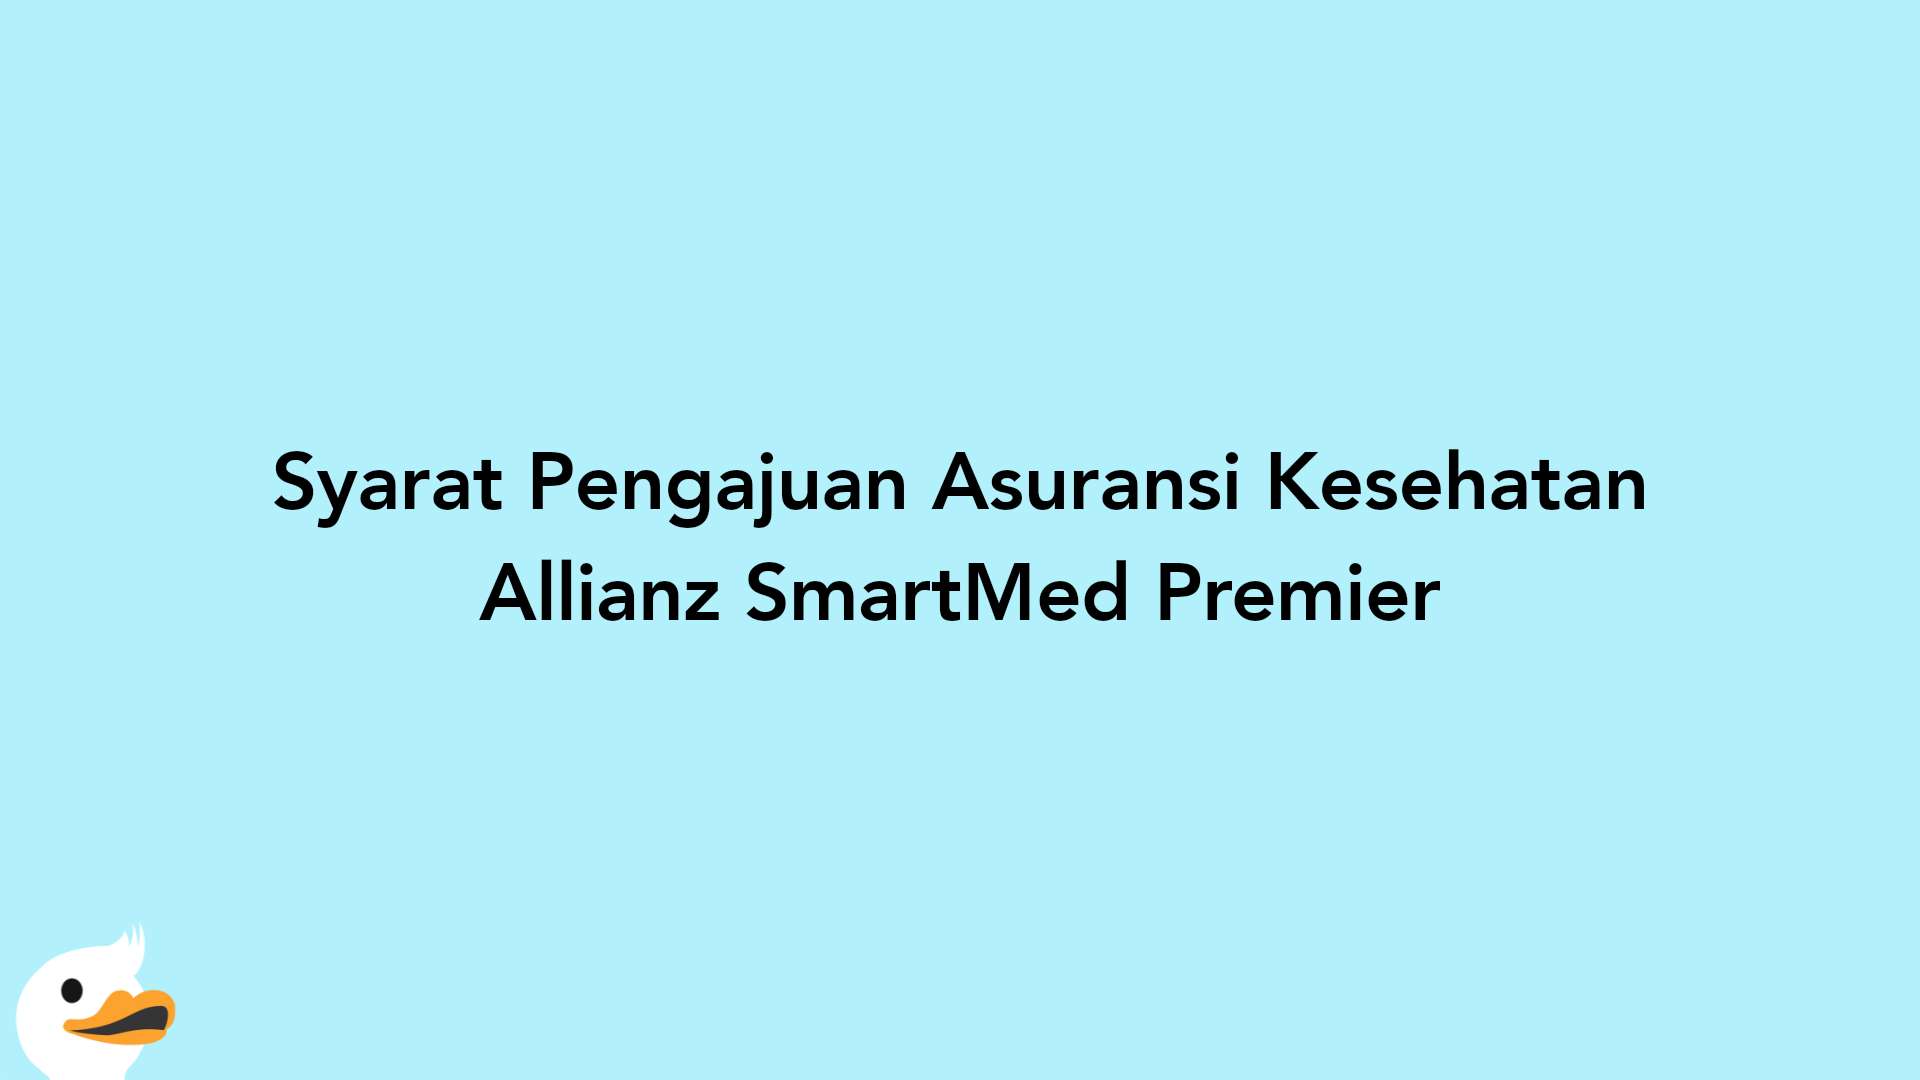 Syarat Pengajuan Asuransi Kesehatan Allianz SmartMed Premier